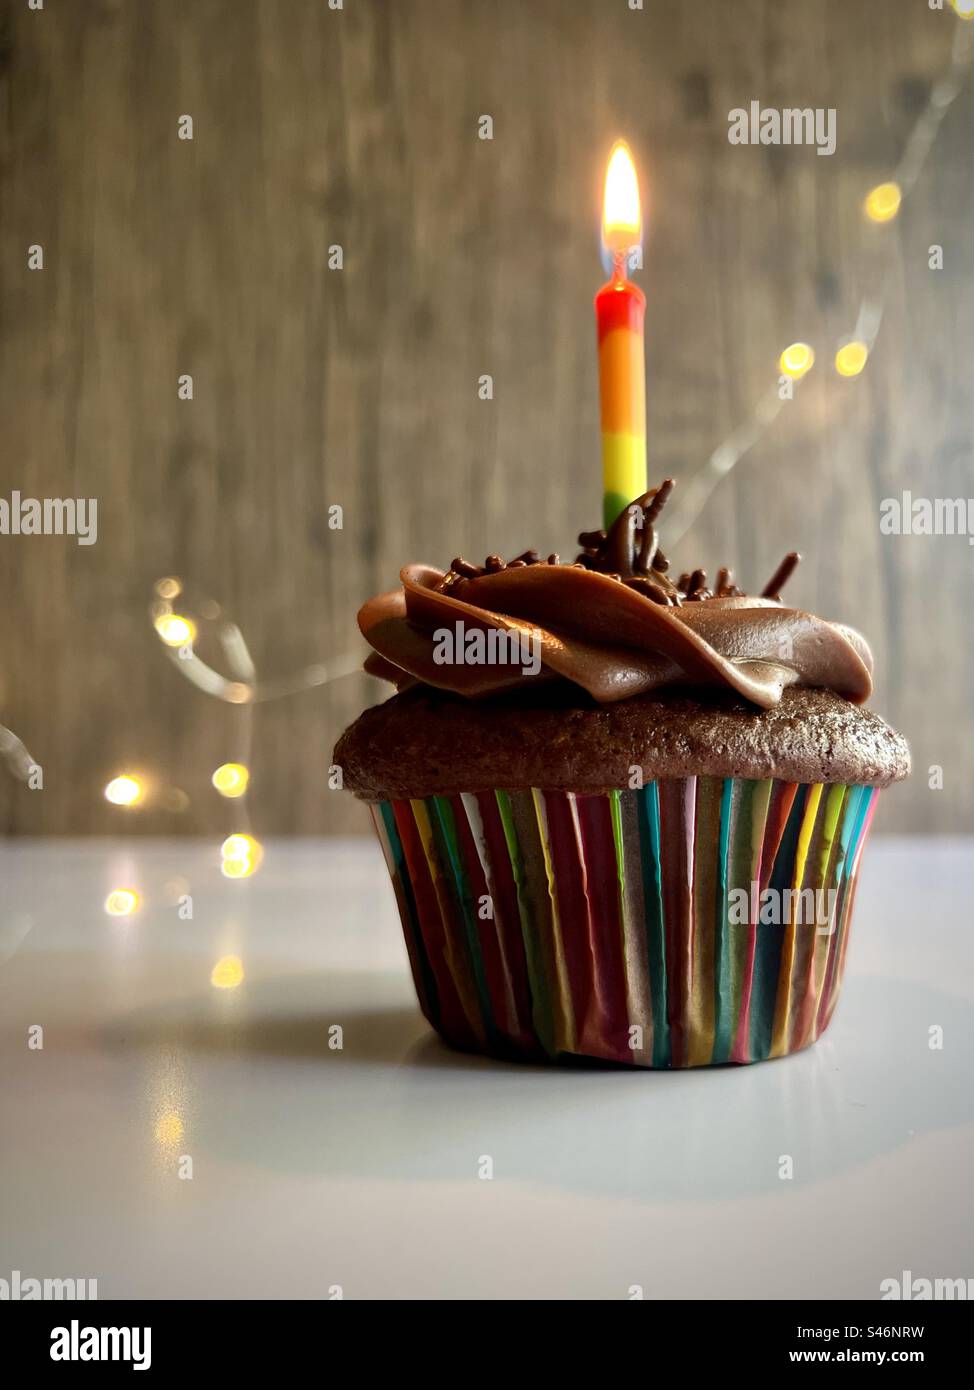 Chocolate cupcake with rainbow candle Stock Photo